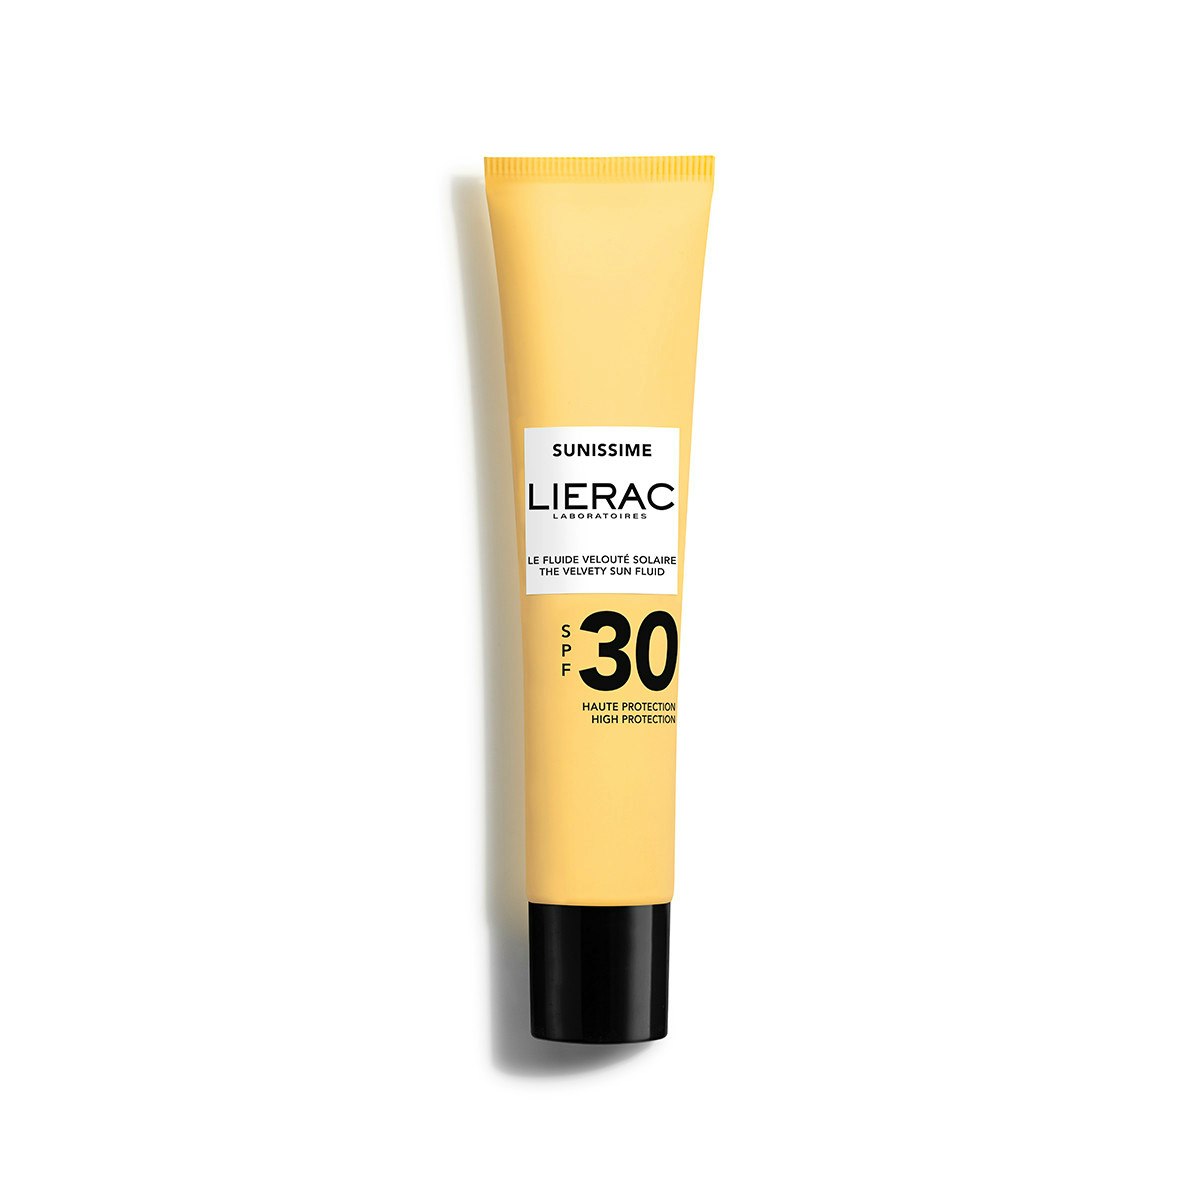 Lierac SUNISSIME Anti-Aging Gesicht Sonnen Fluid SPF 30 - 40 ml